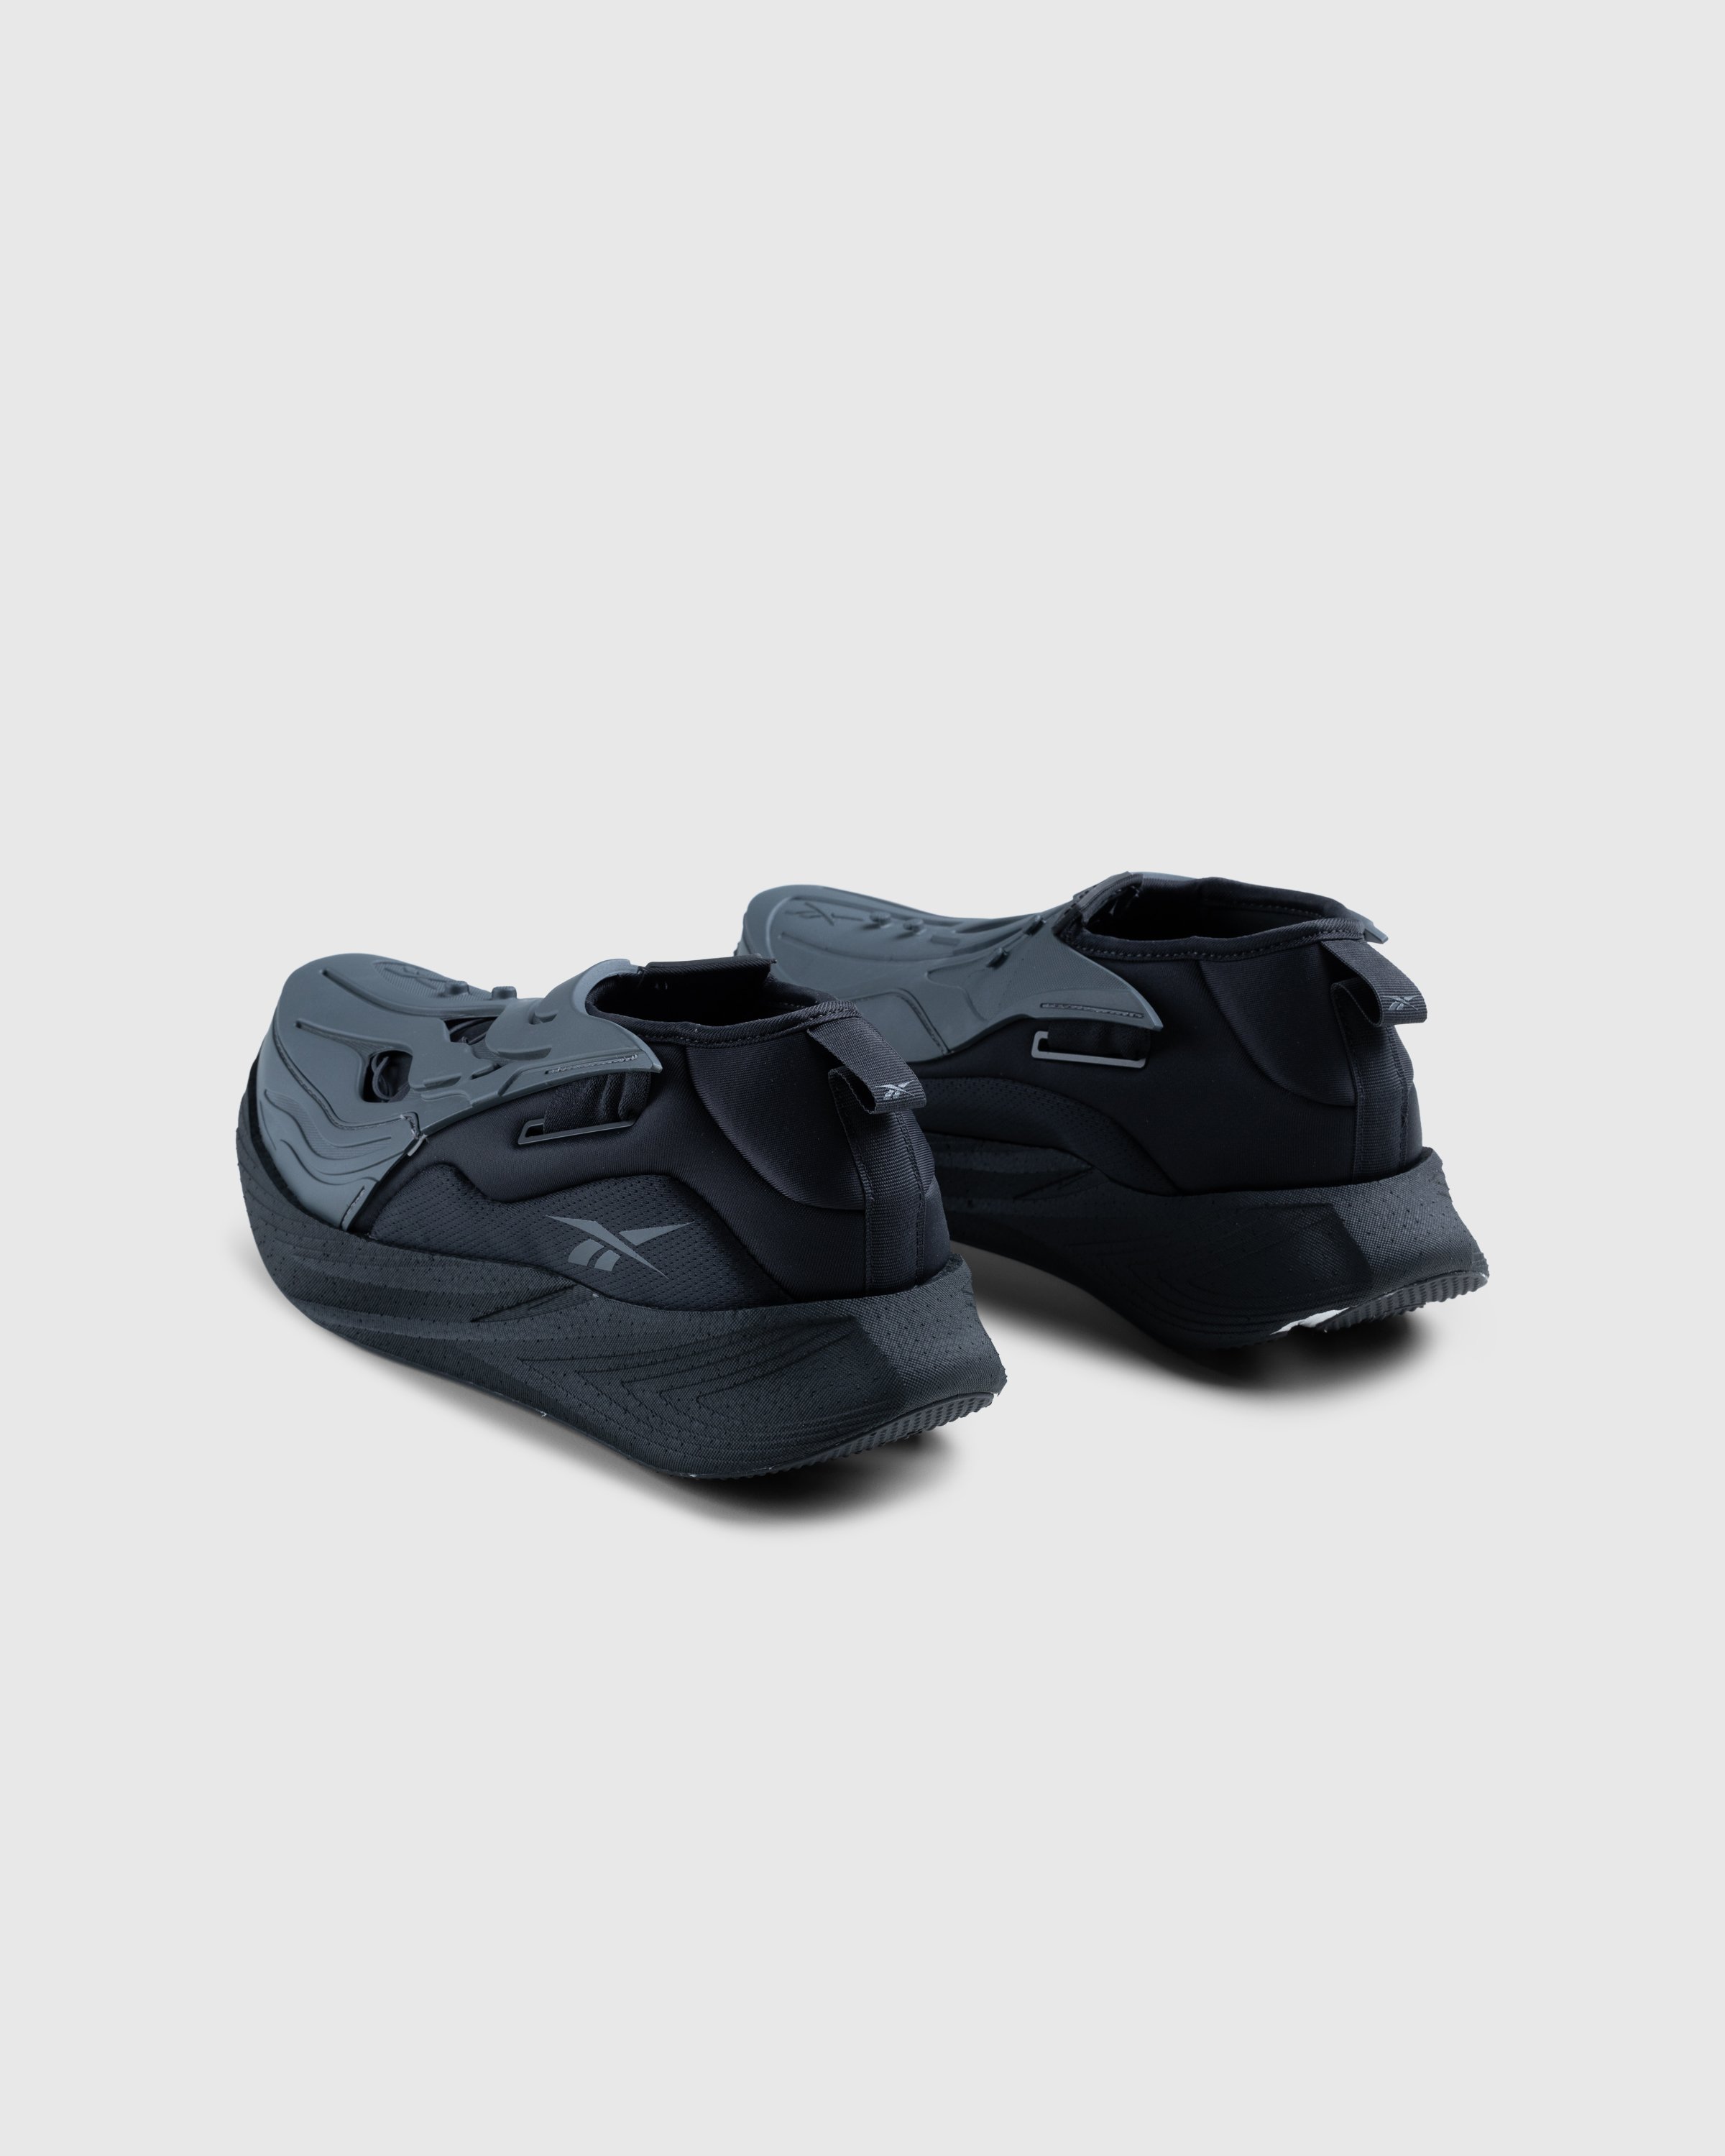 Reebok - FLOATRIDE BLACK/SILVER - Footwear - Black - Image 4